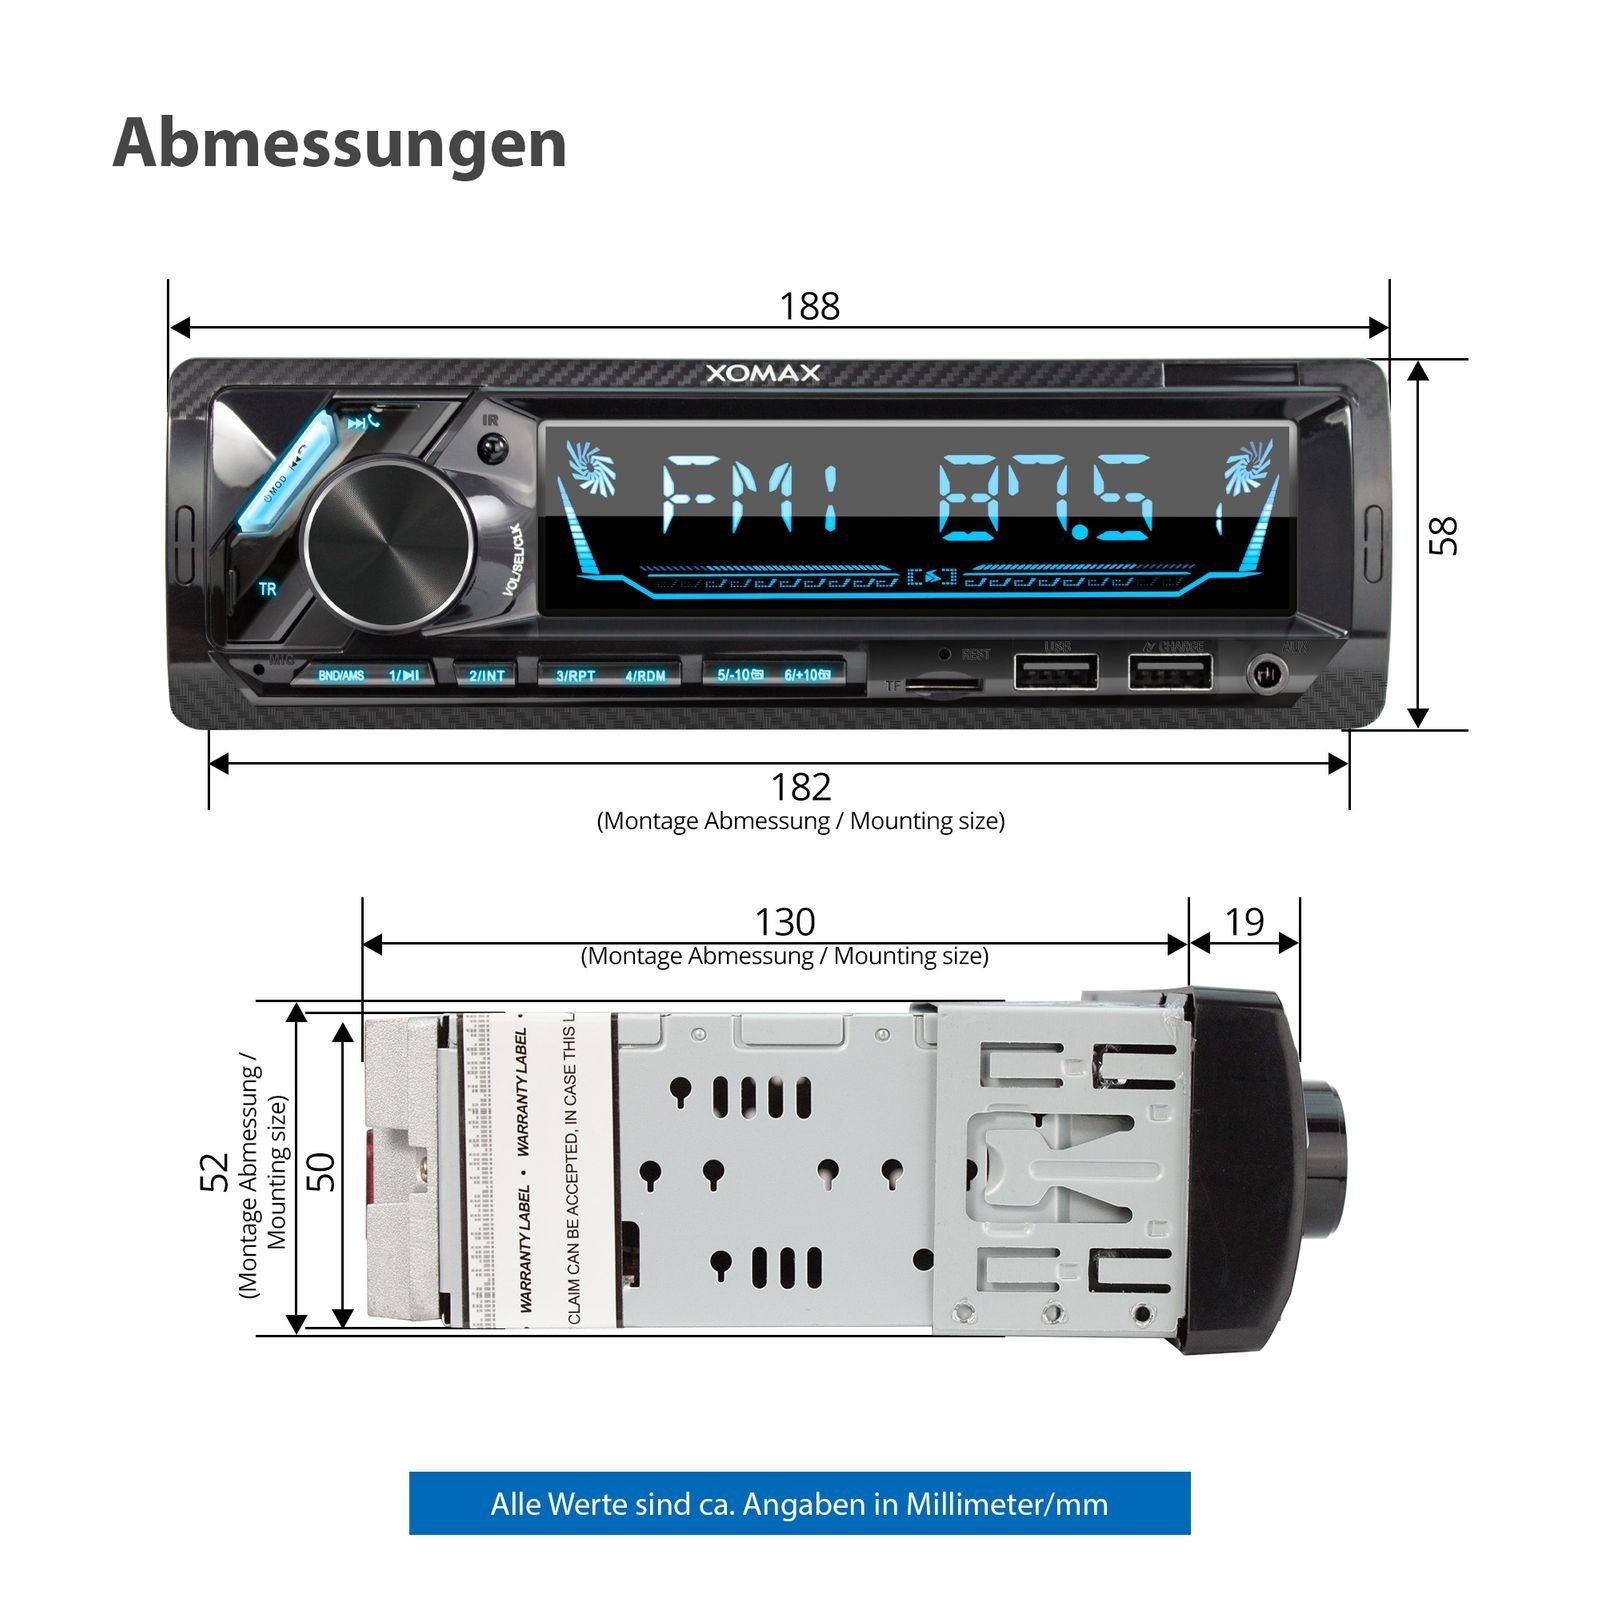 USB, XOMAX Autoradio DIN mit SD, 2x XM-RD285 AUX, DAB+ Autoradio plus, Bluetooth, 1